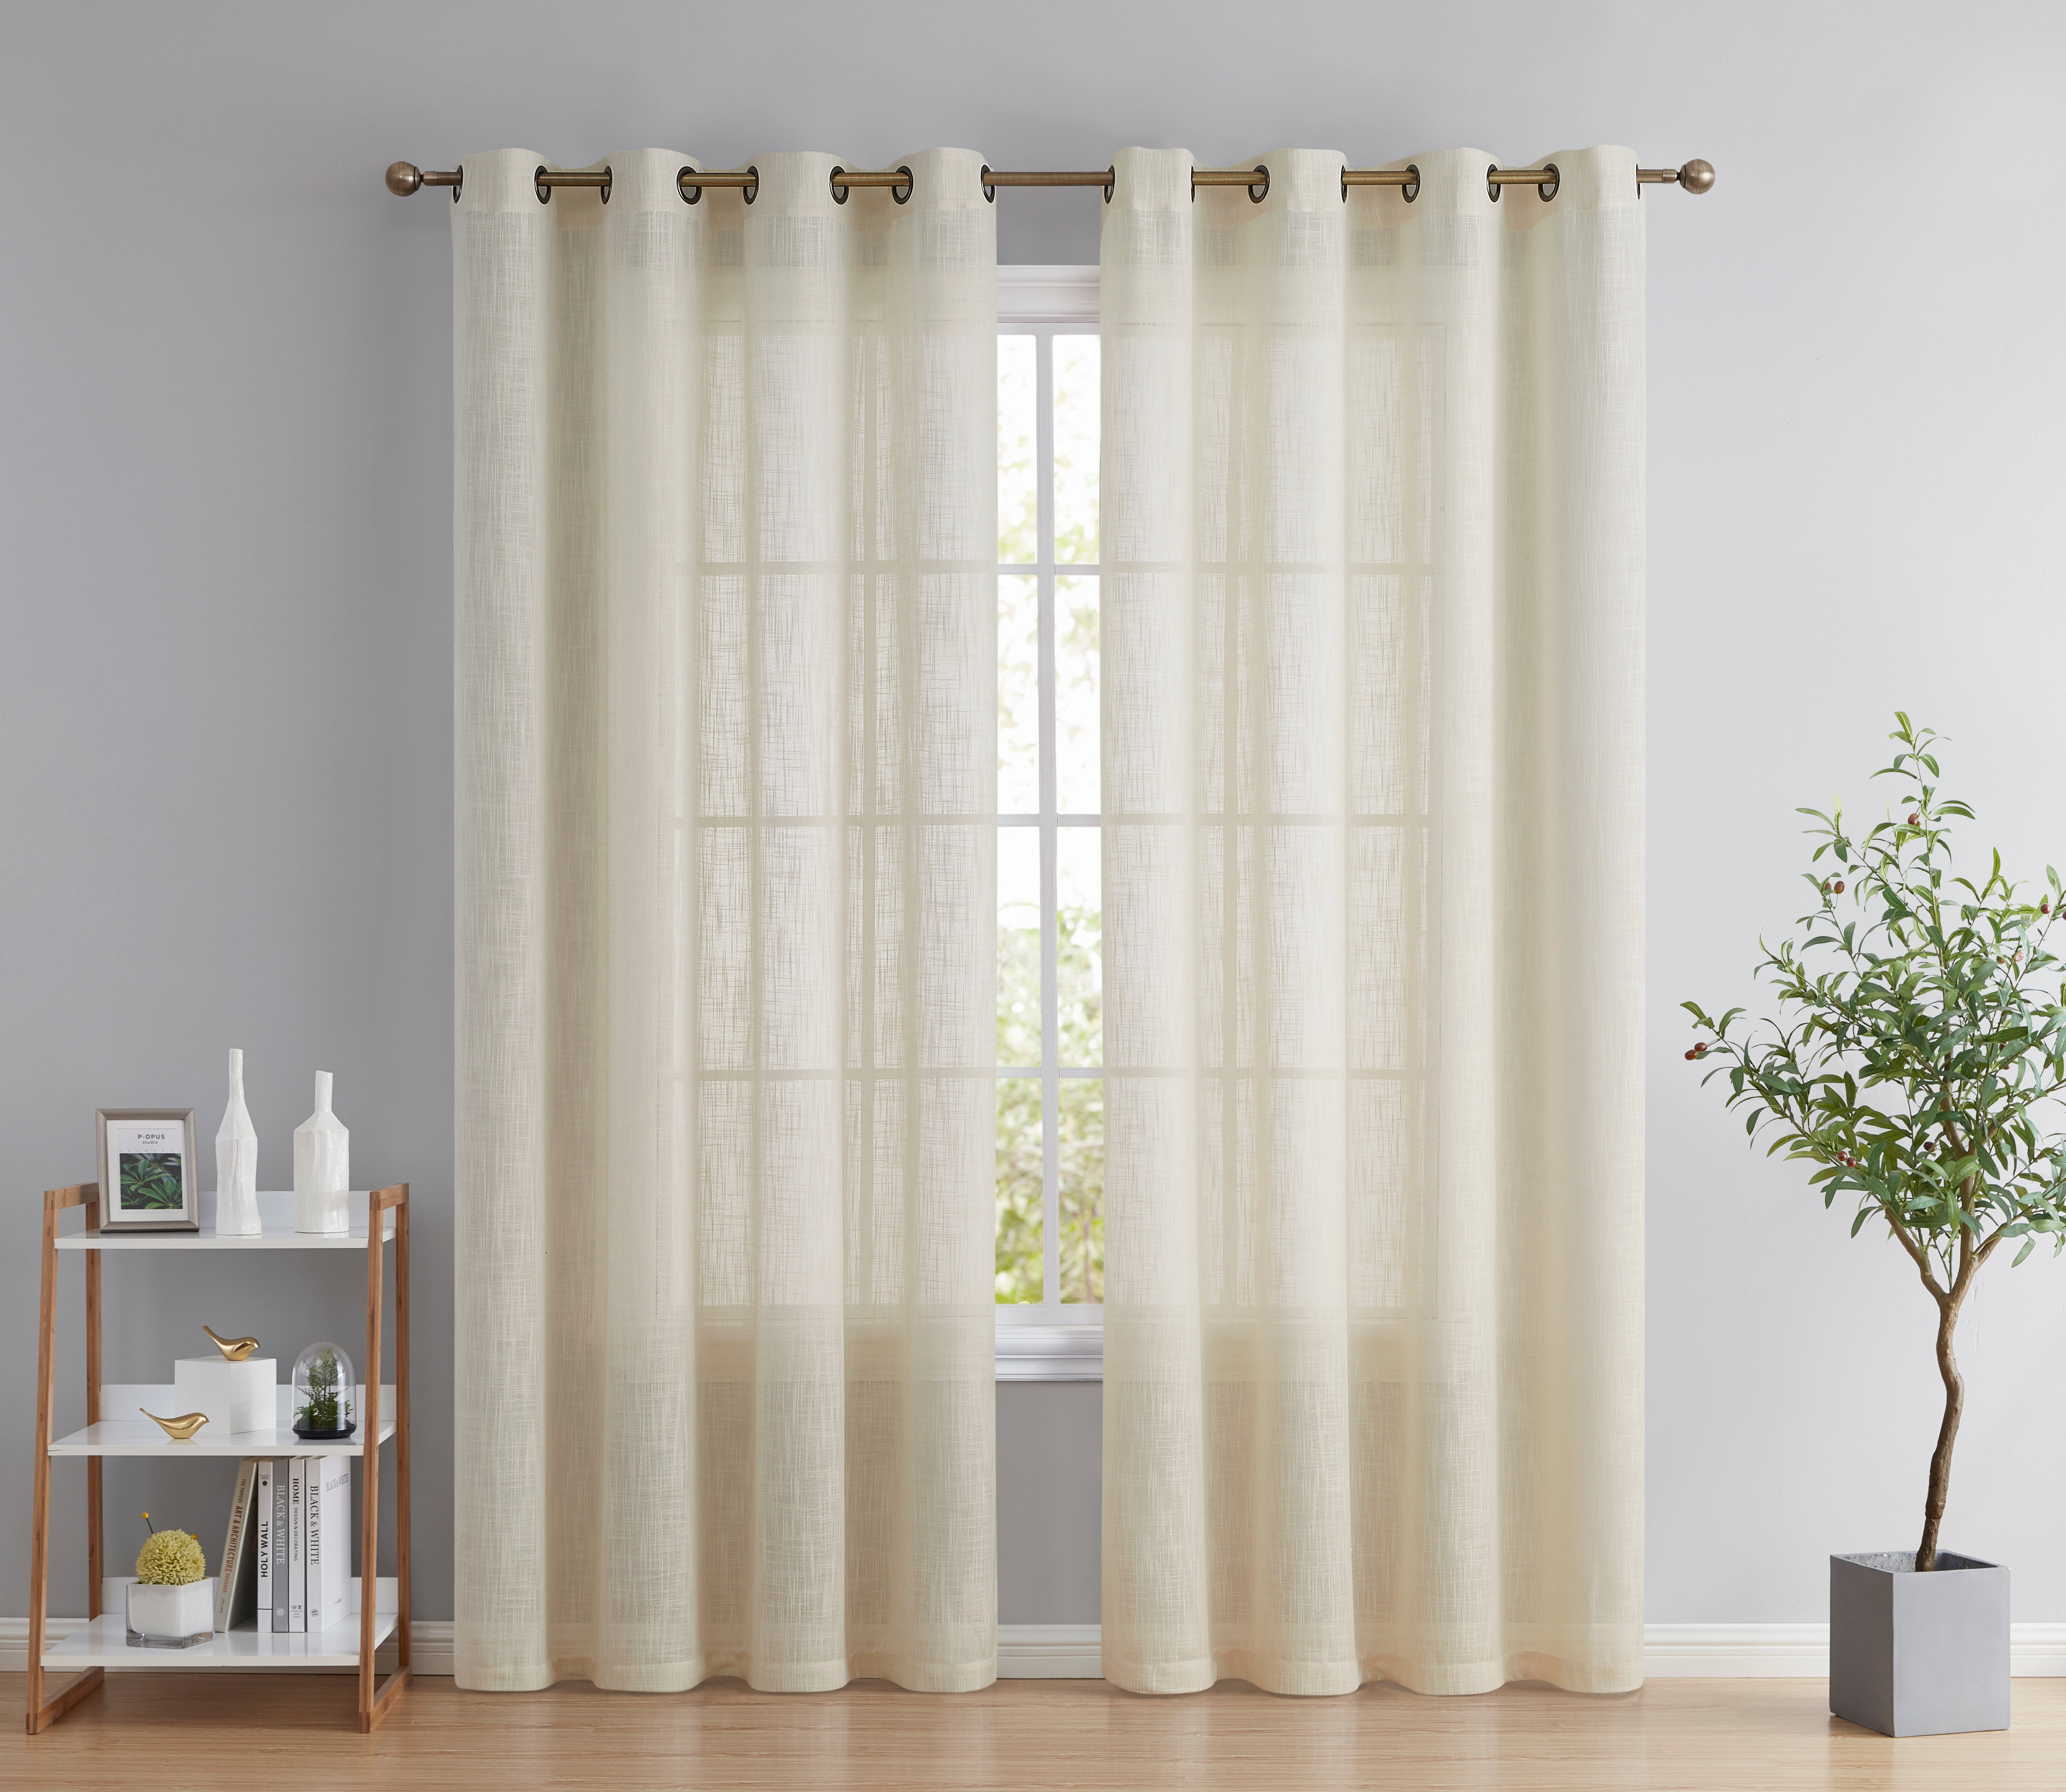 Archaeo Textured Cotton Blend Sheer Curtain 54 x 63 Blush